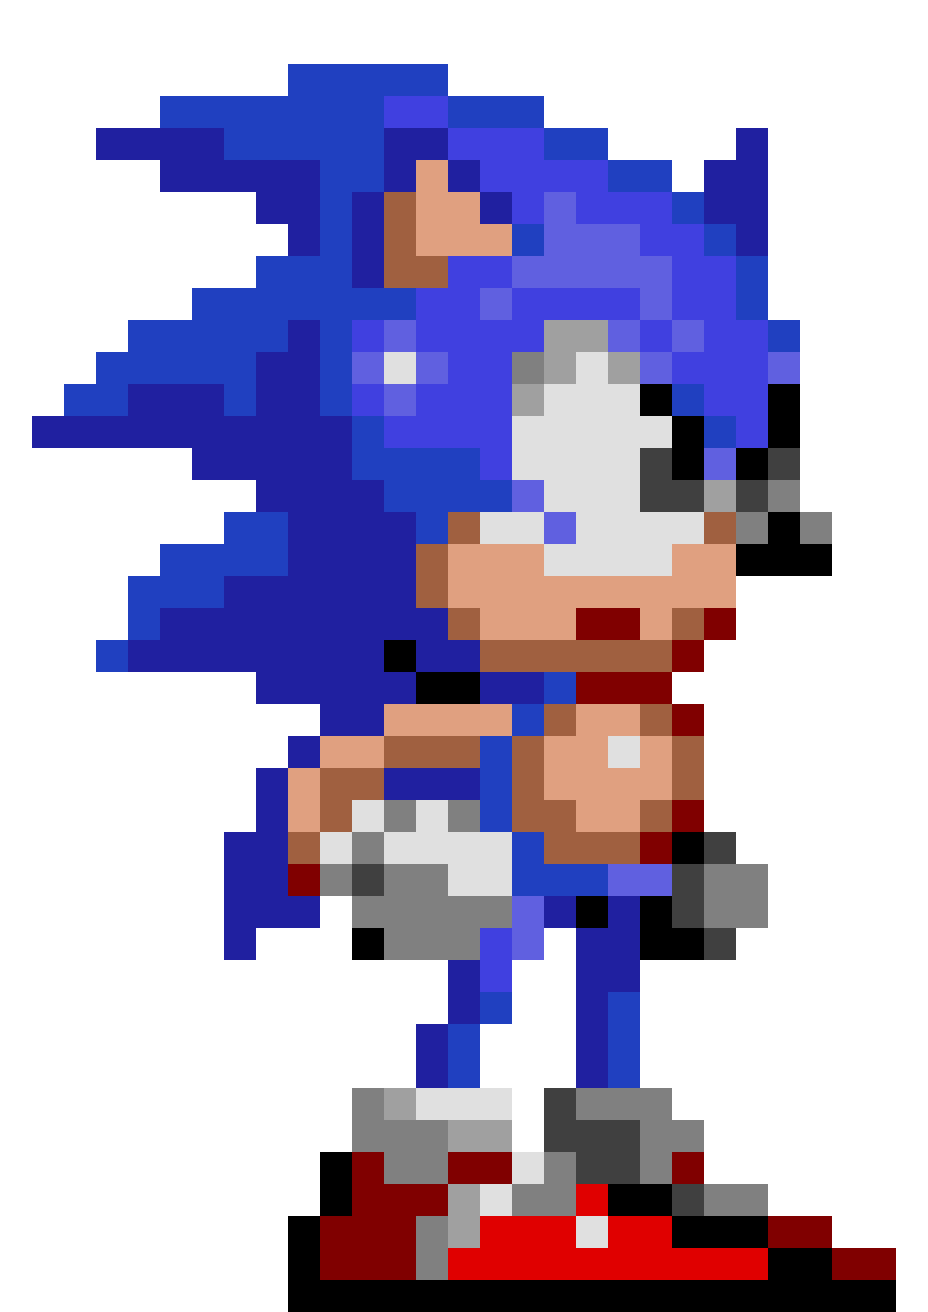 Sonic The Hedgehog 2 Sprites!!!